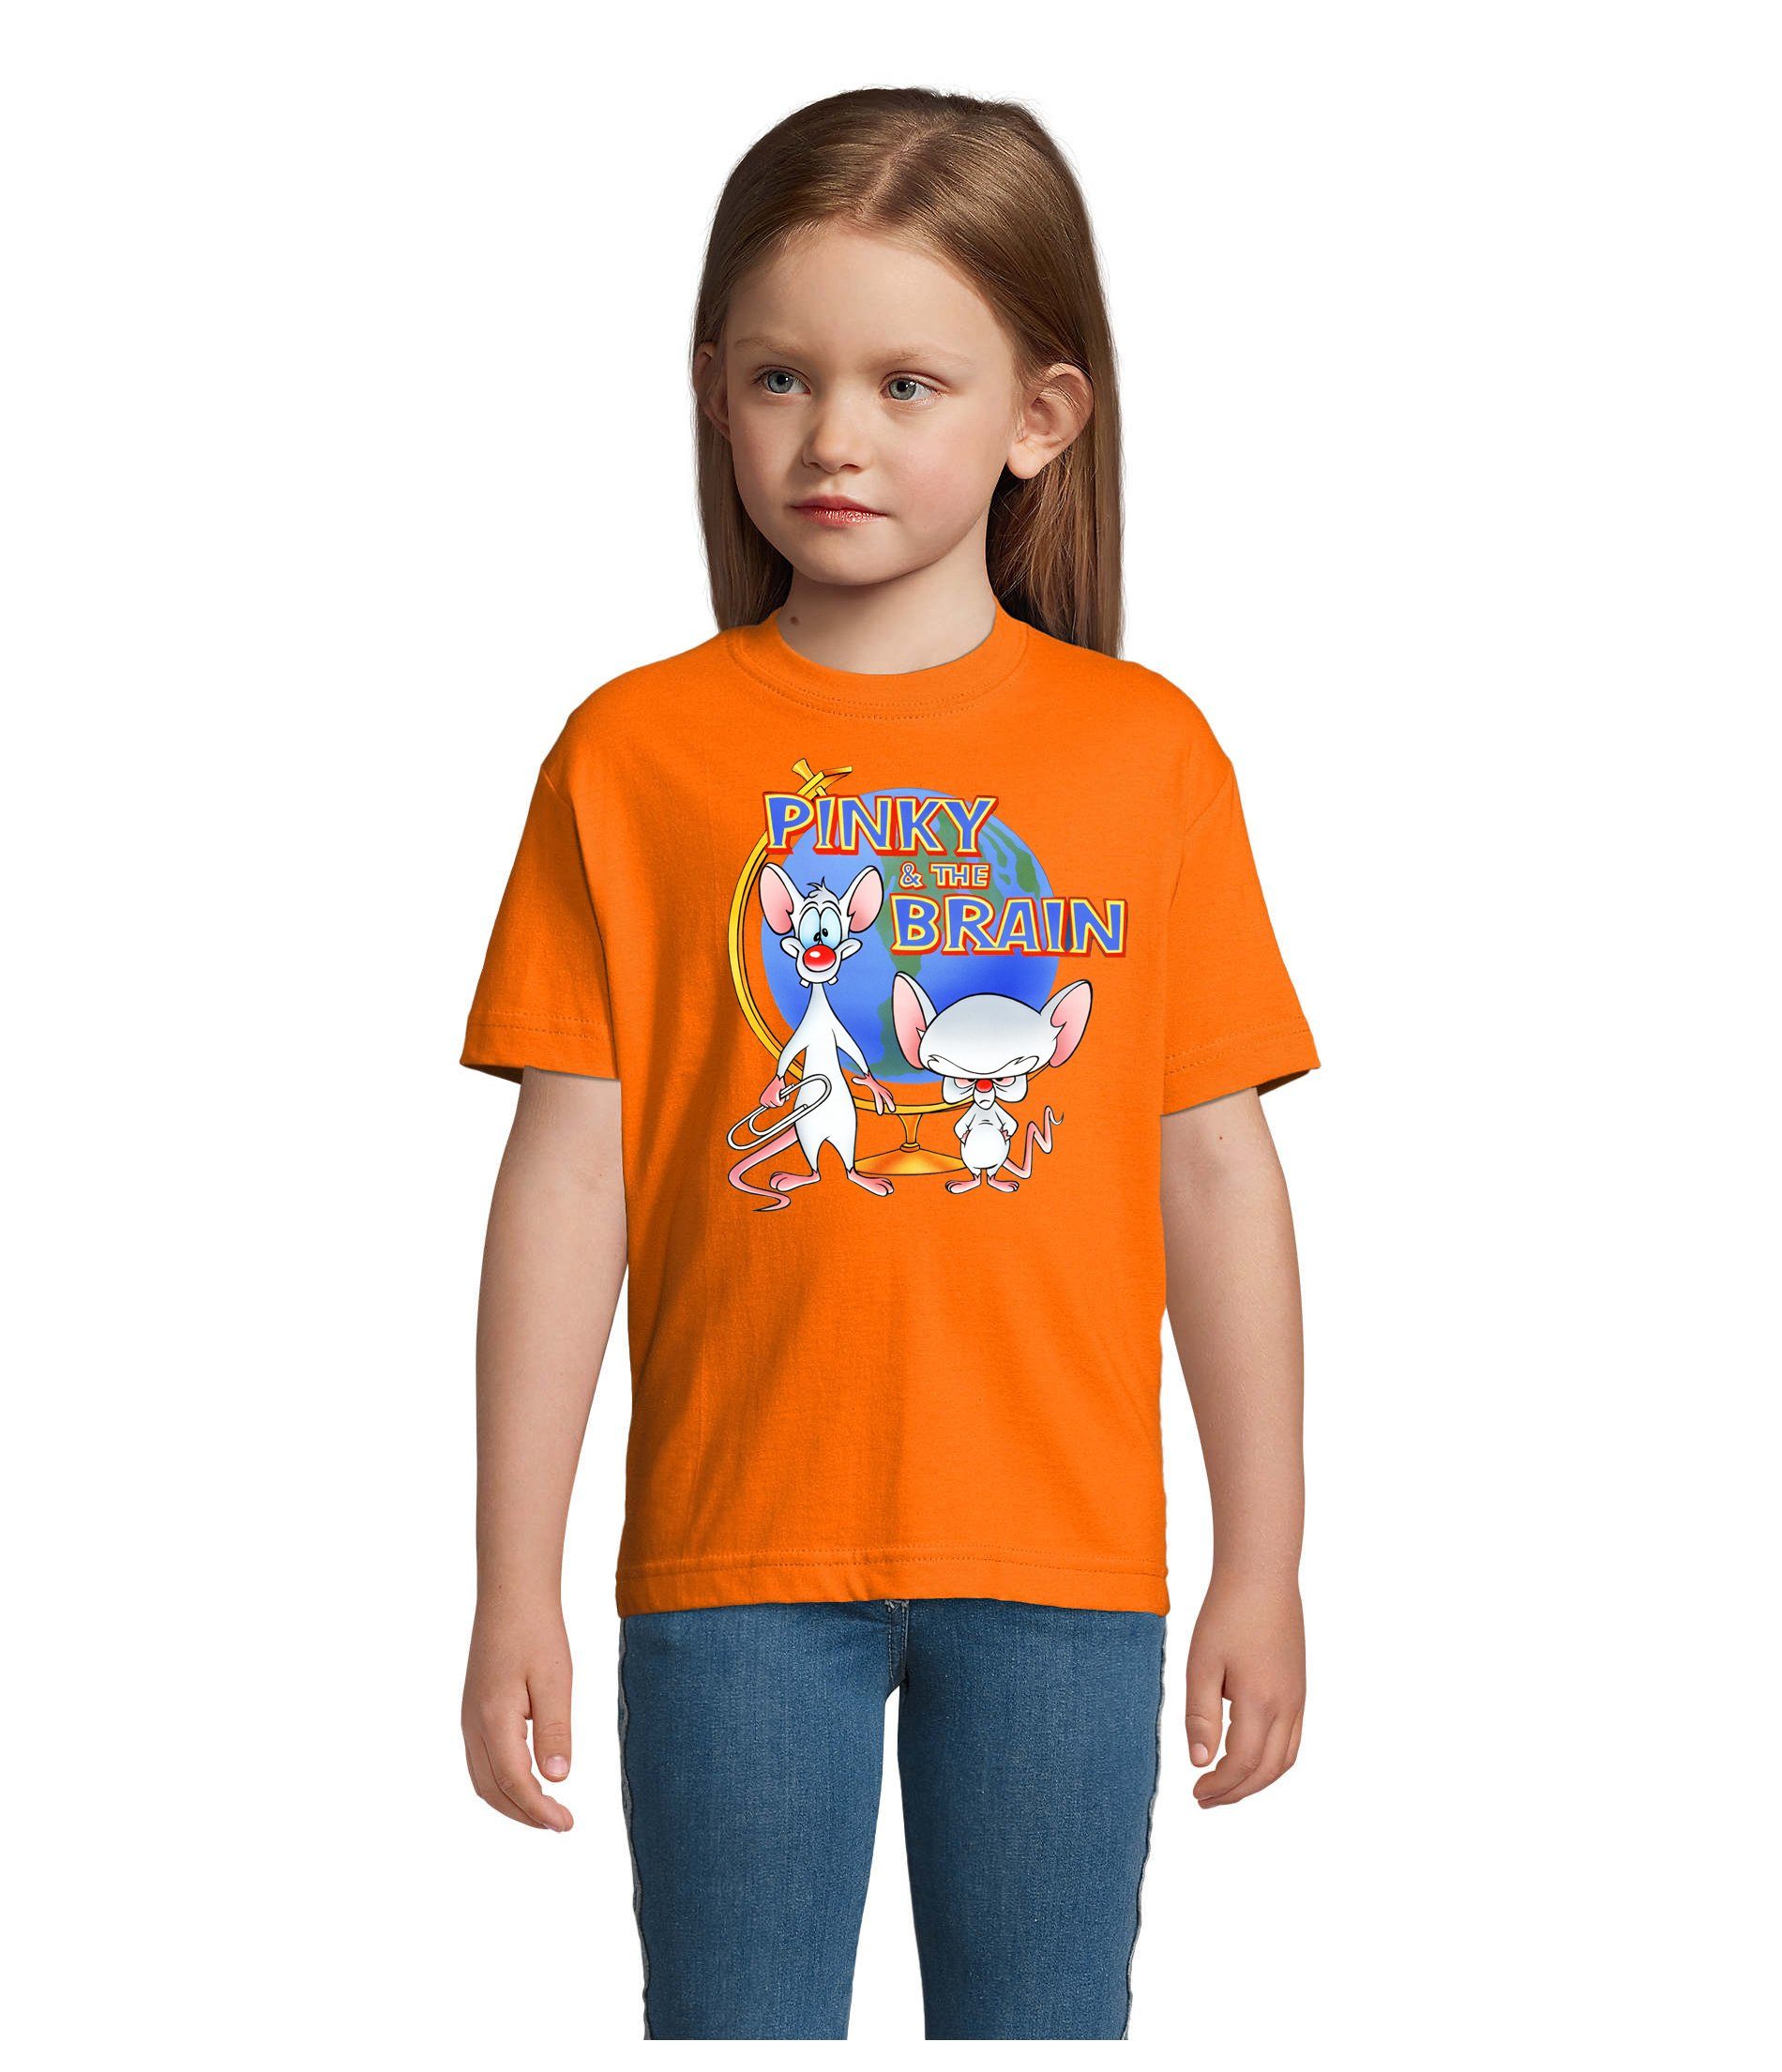 Weltherrschaft Kinder Cartoon Pinky & Brain Blondie T-Shirt Orange and Comic the Brownie